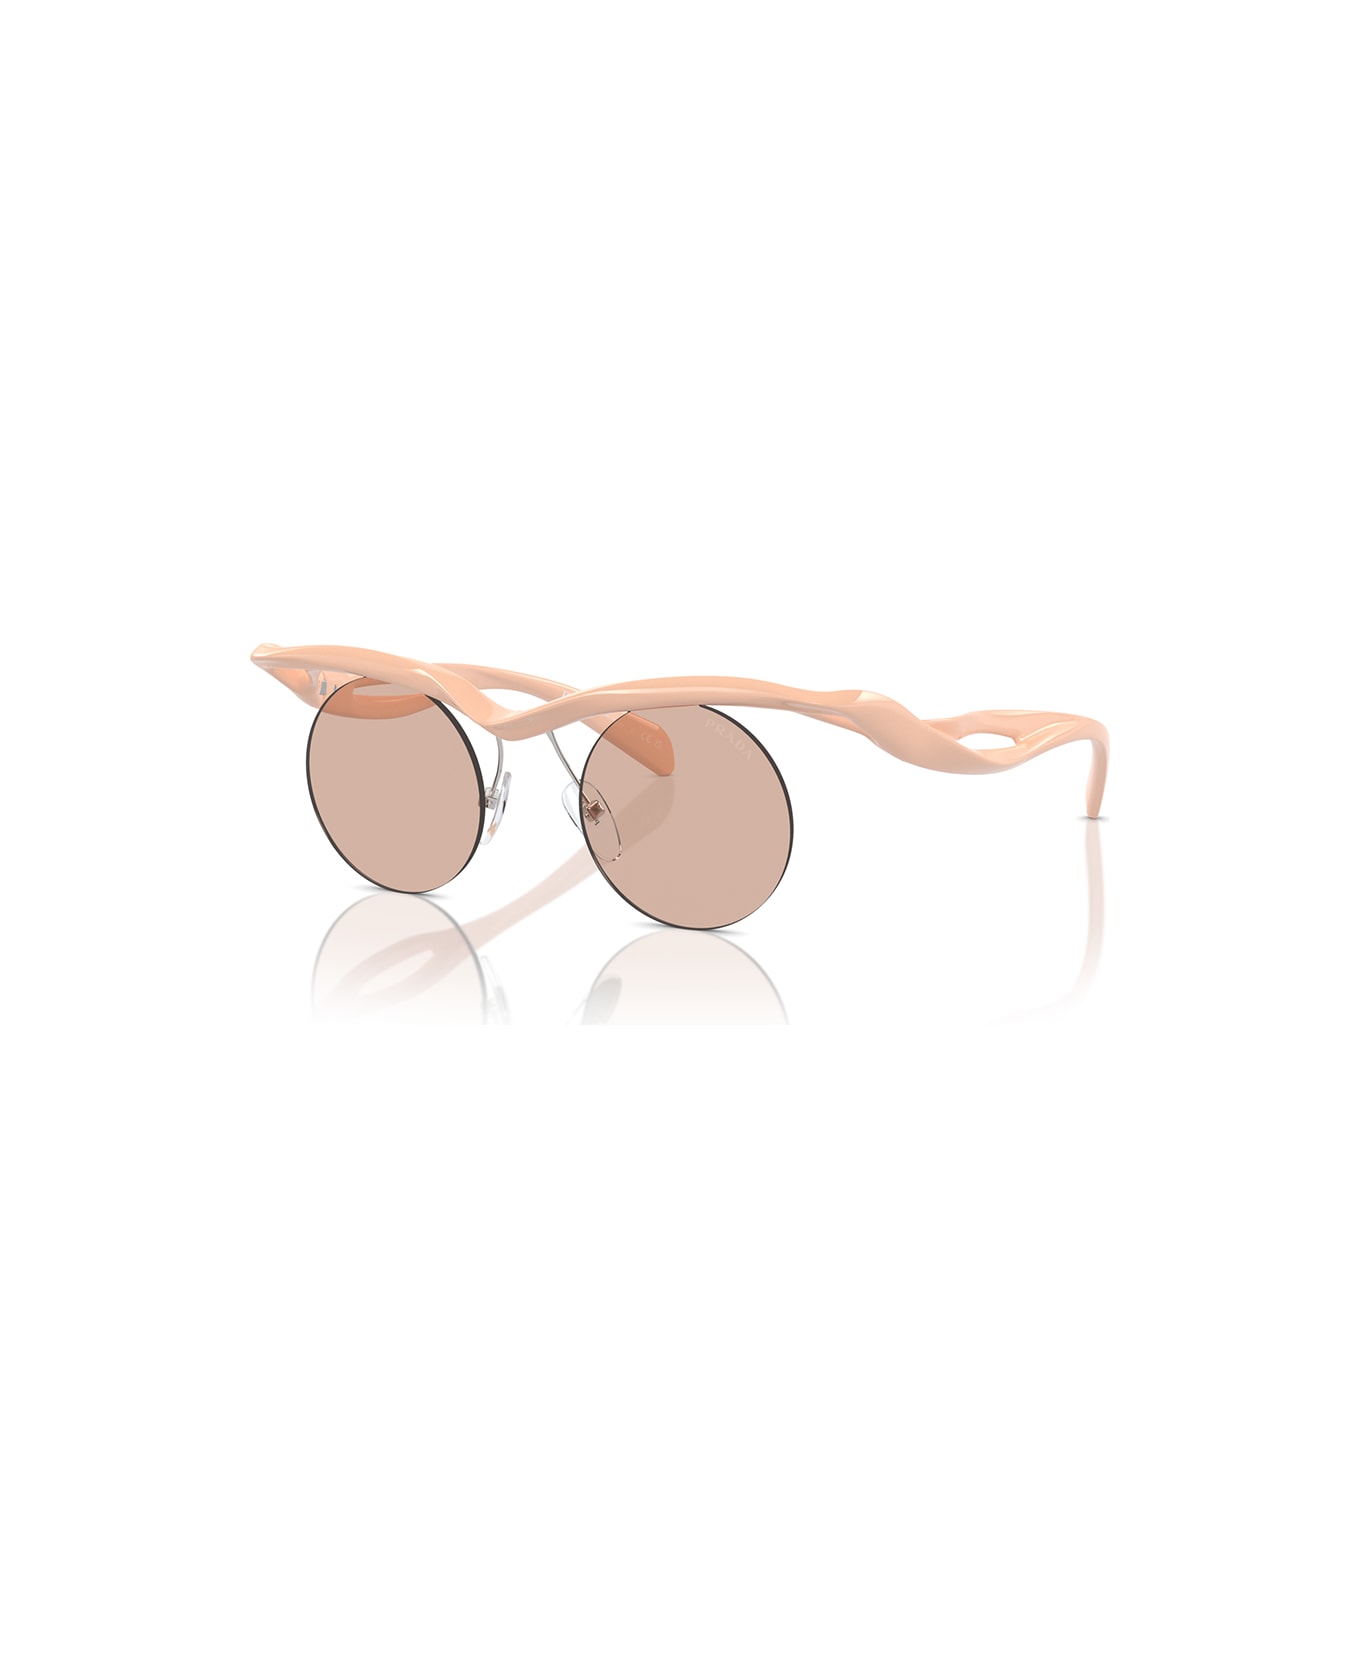 Prada Eyewear Sunglasses - Rosa/Marrone サングラス